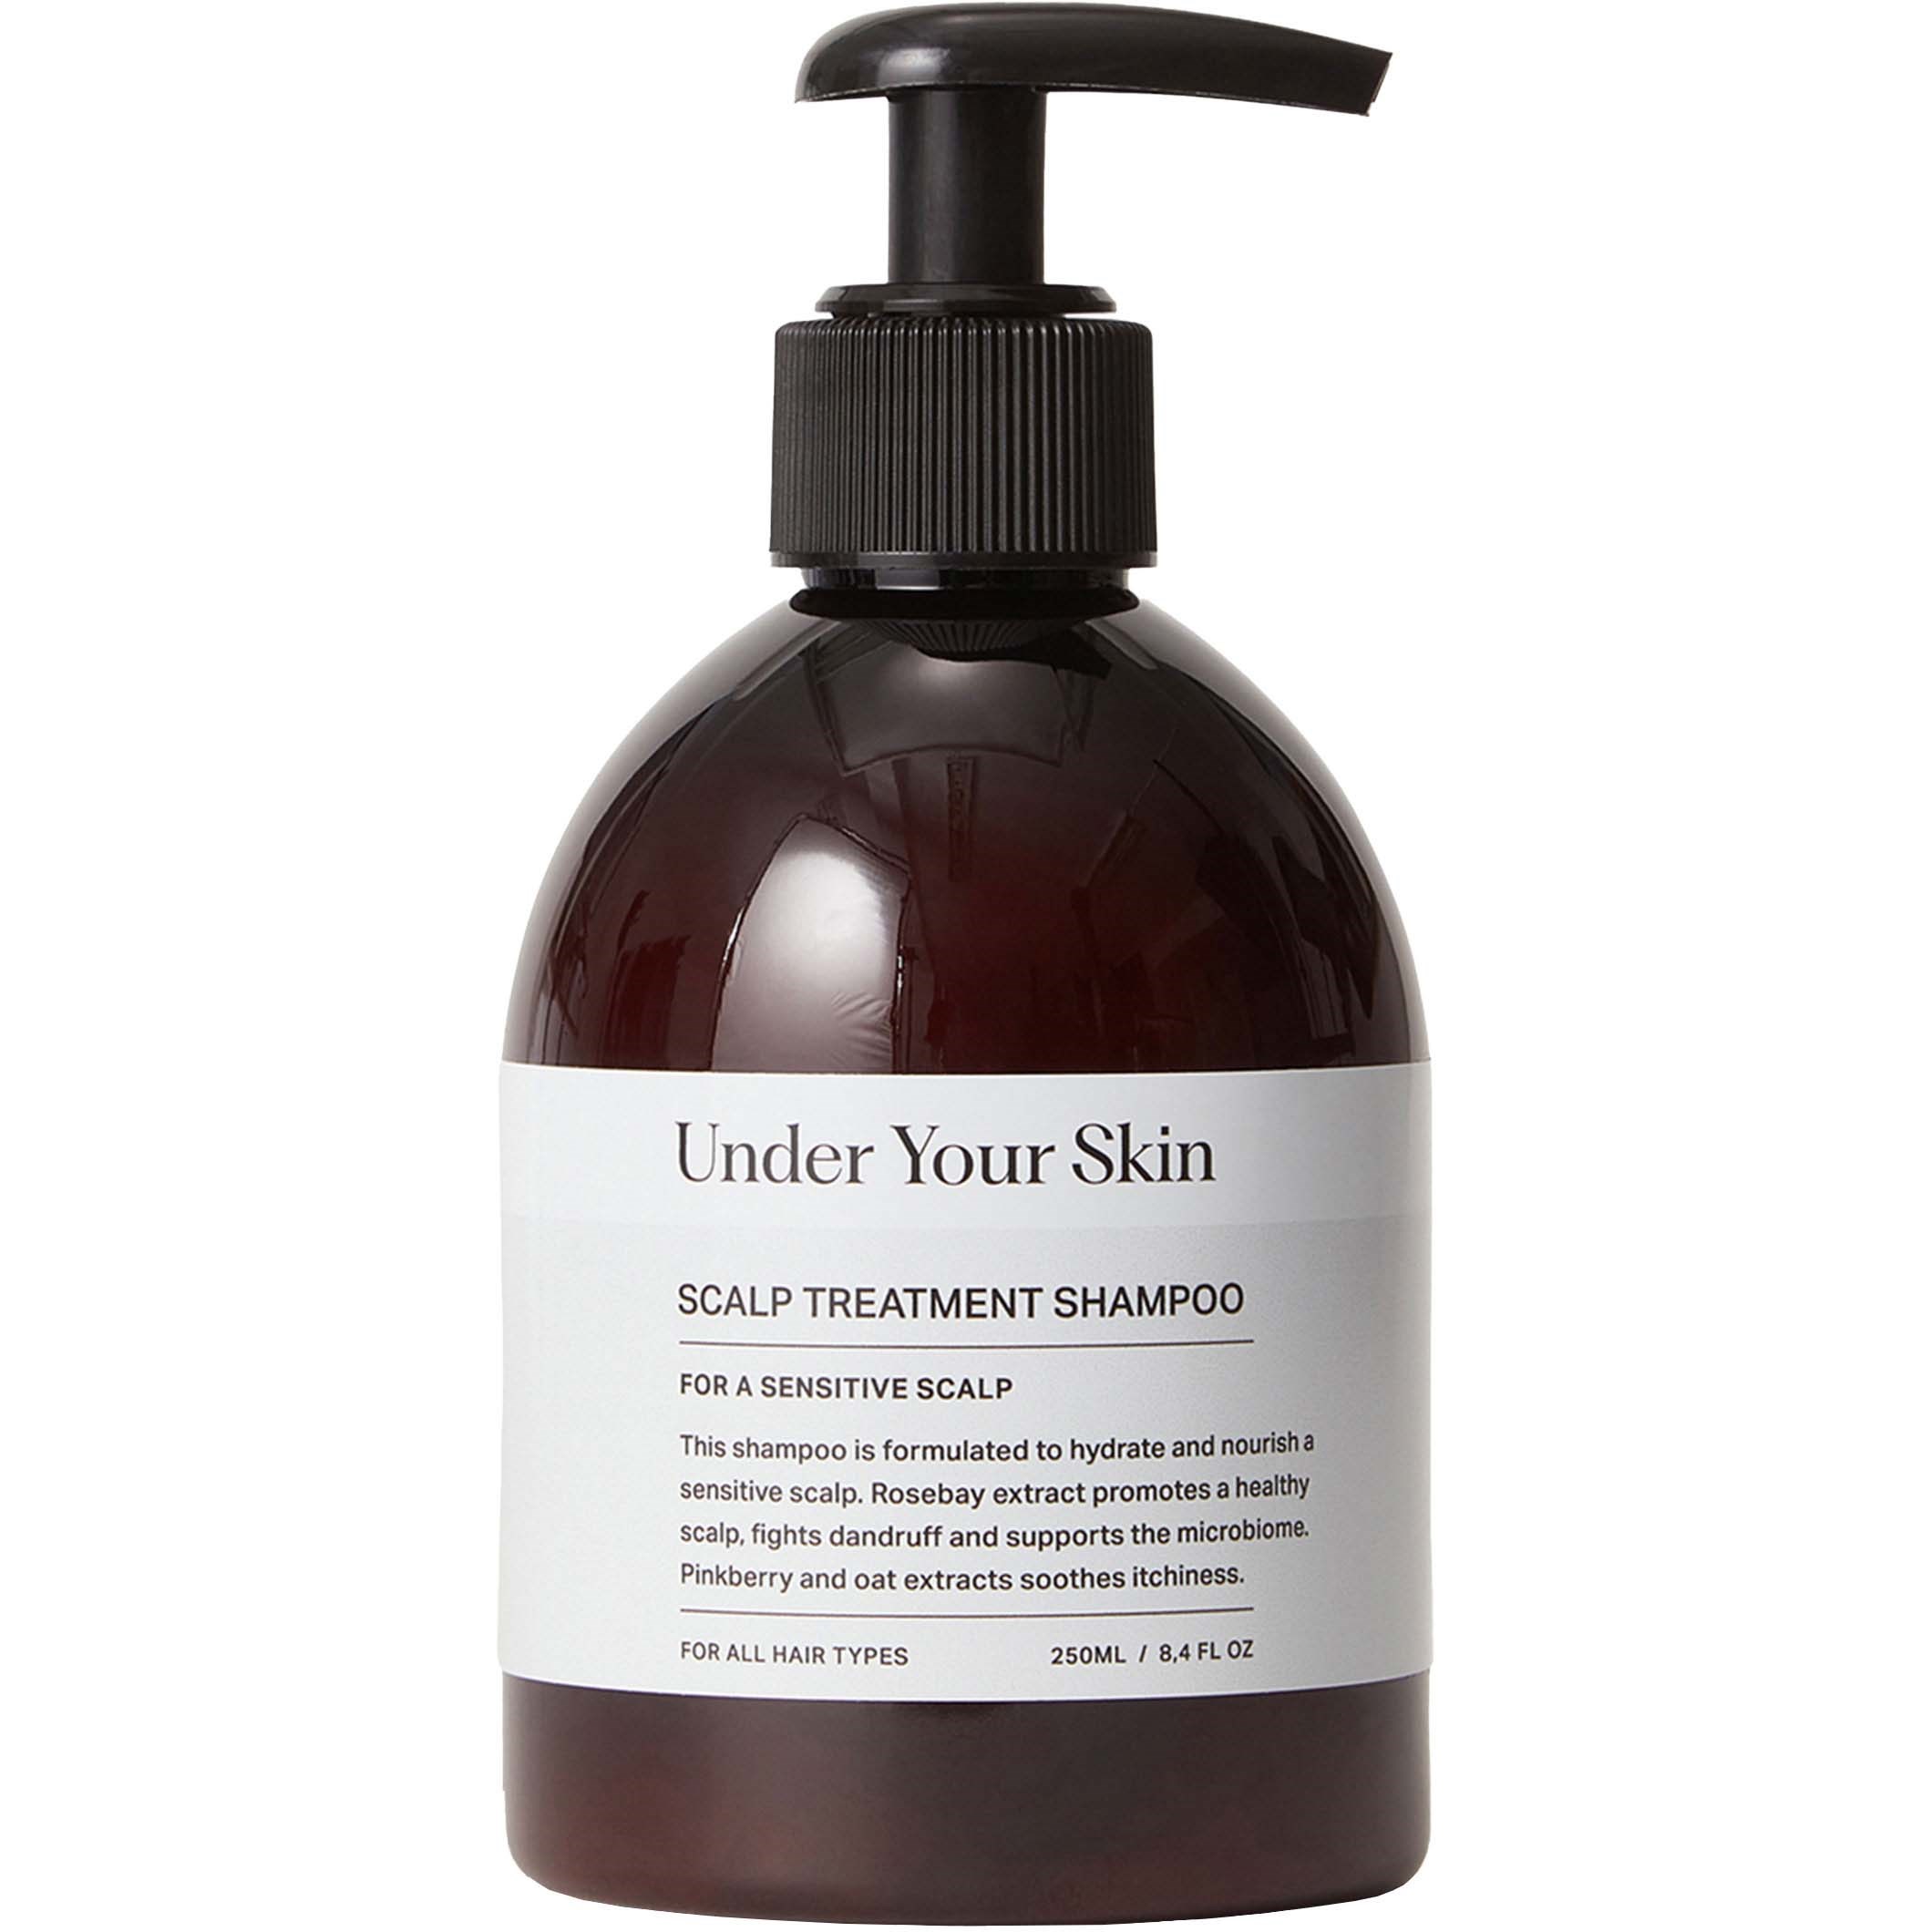 Under Your Skin Sensitive Scalp Treatment Shampoo 250 ml